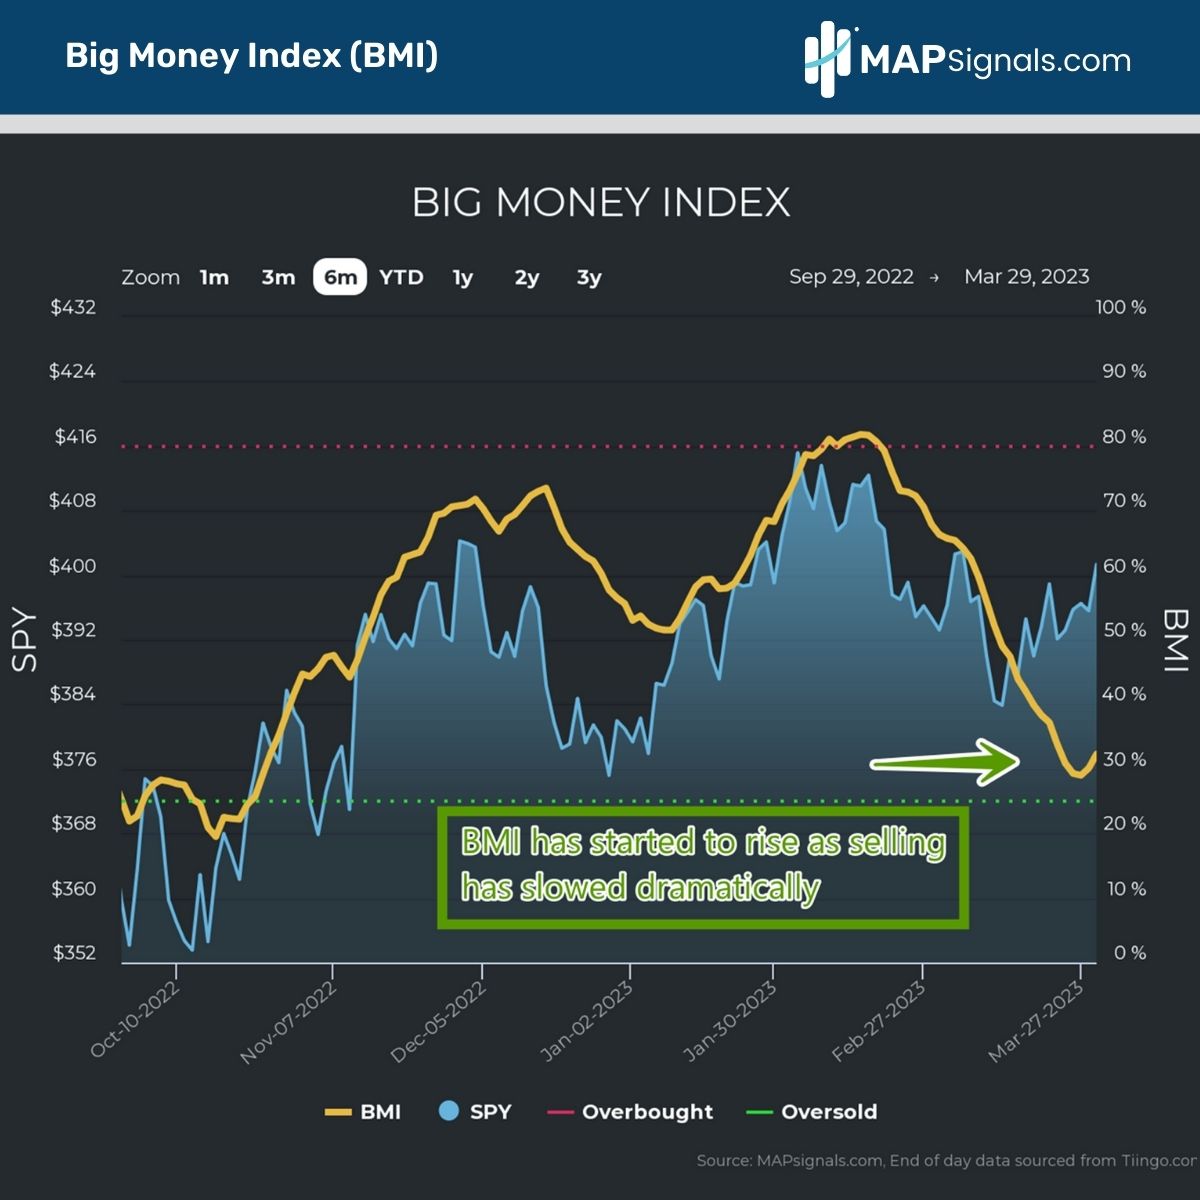 Big Money Index (BMI) rises as selling slows | MAPsignals